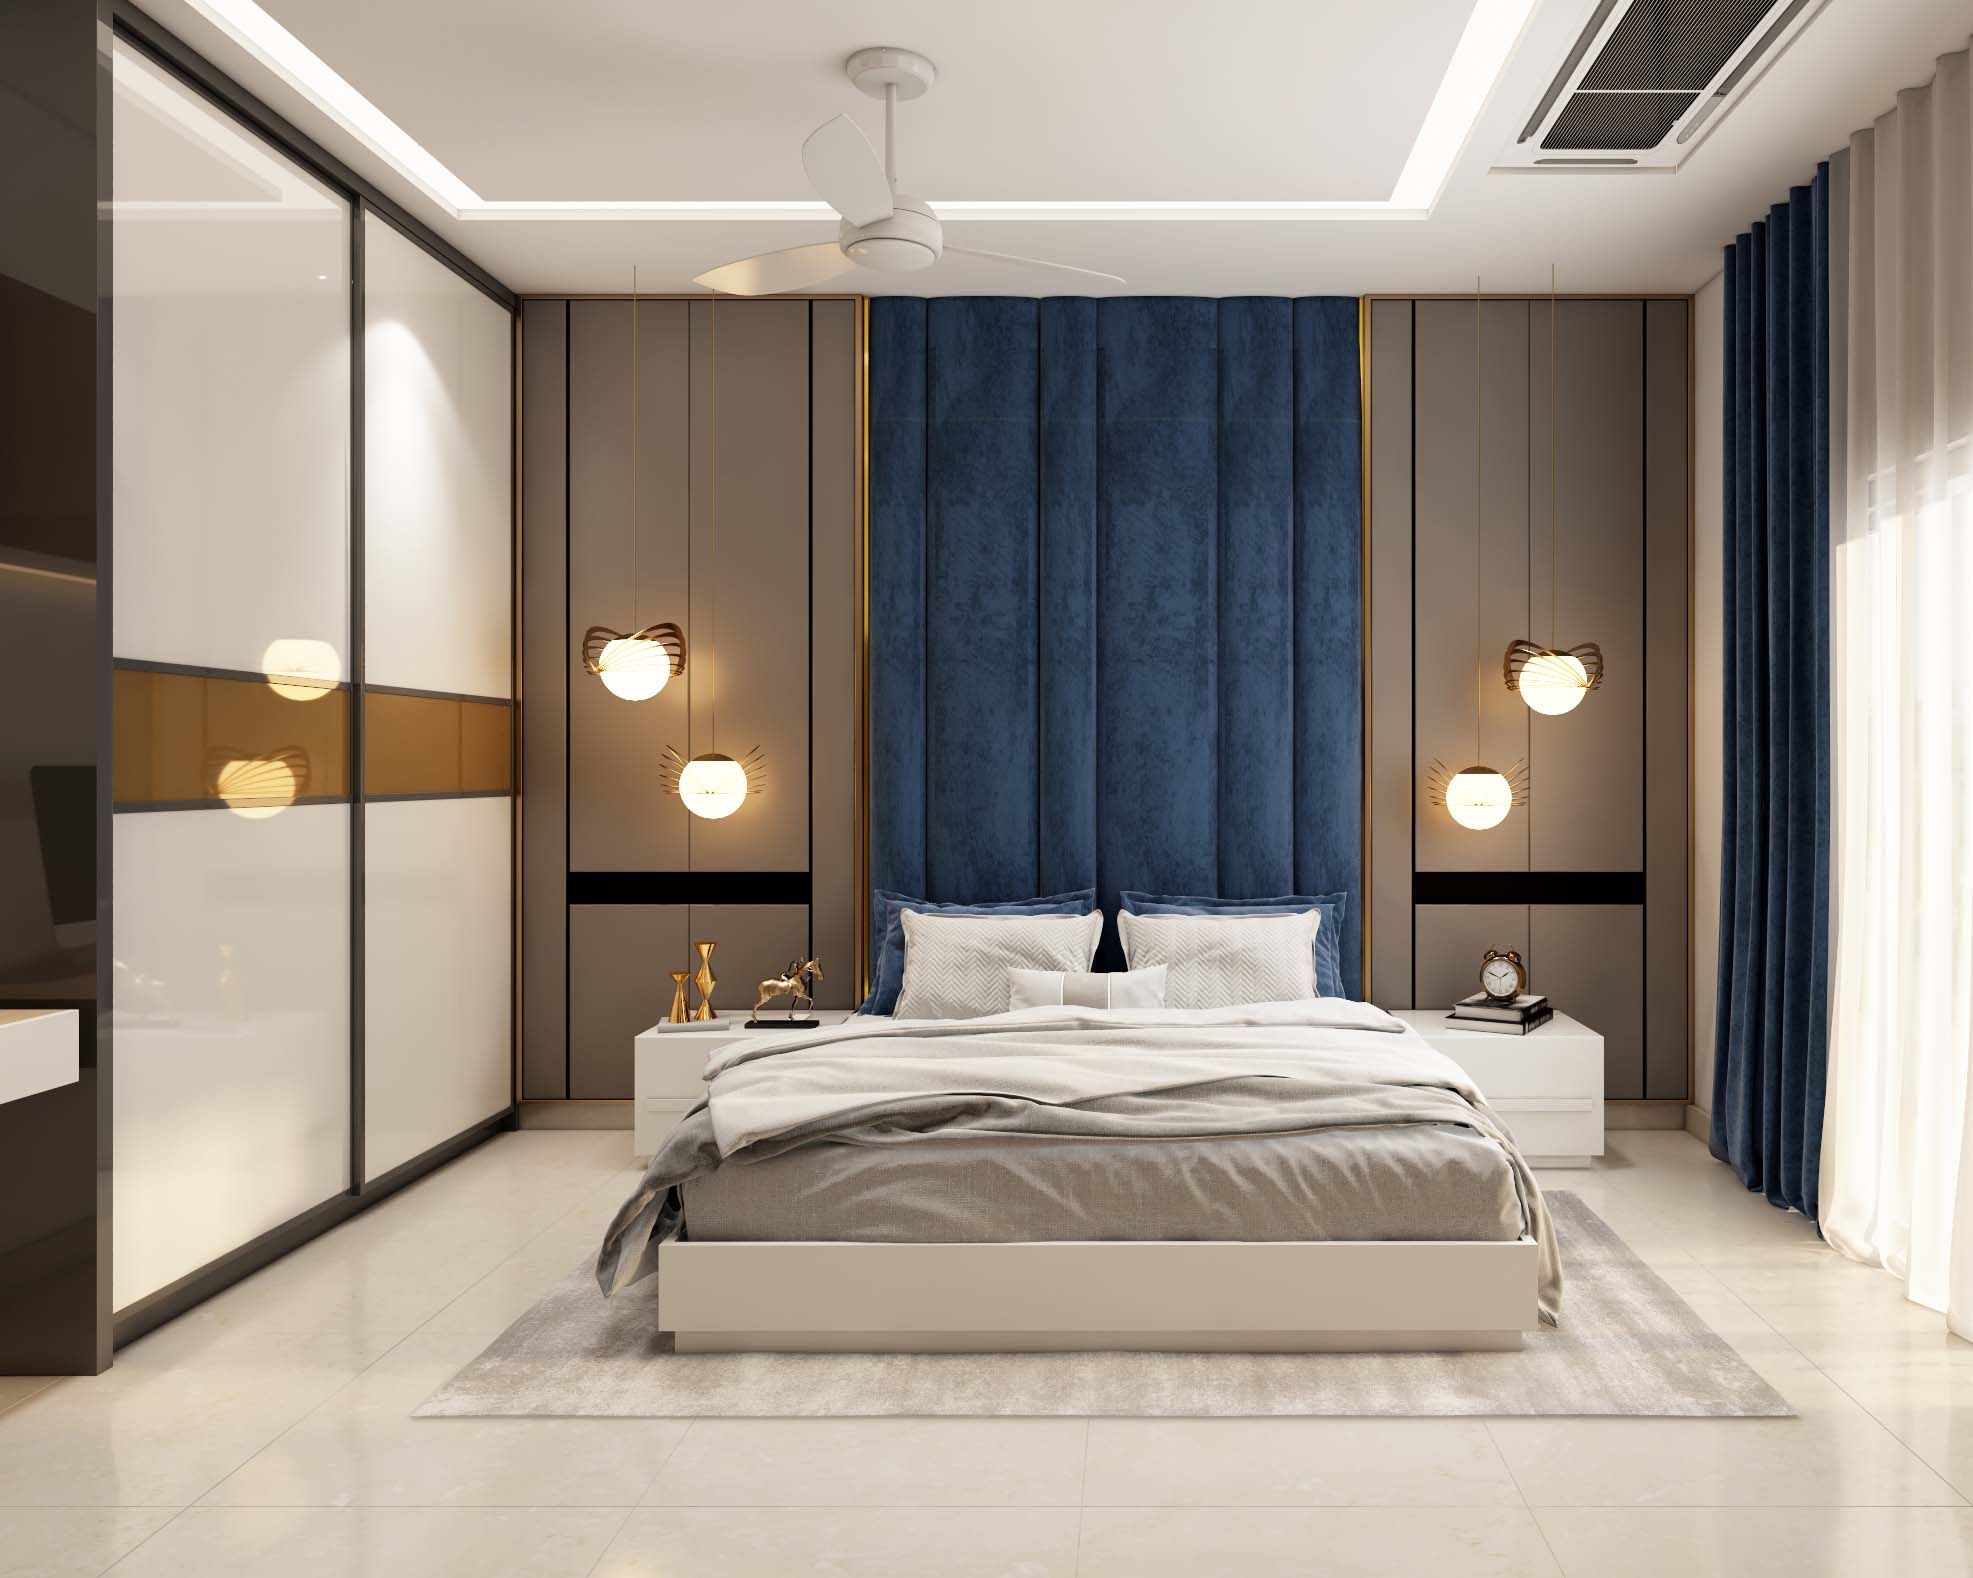 100 Stylish Bedroom Tile Design Ideas